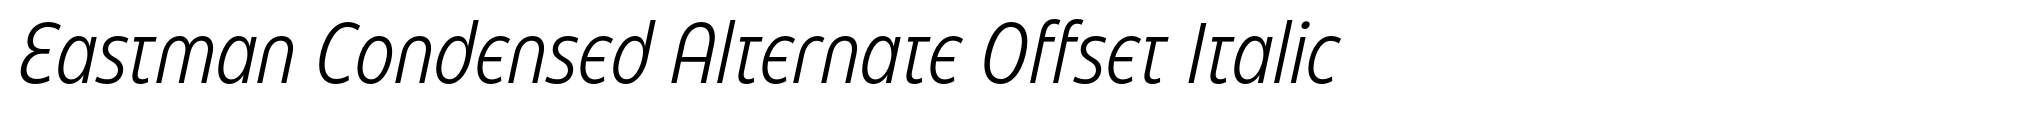 Eastman Condensed Alternate Offset Italic image